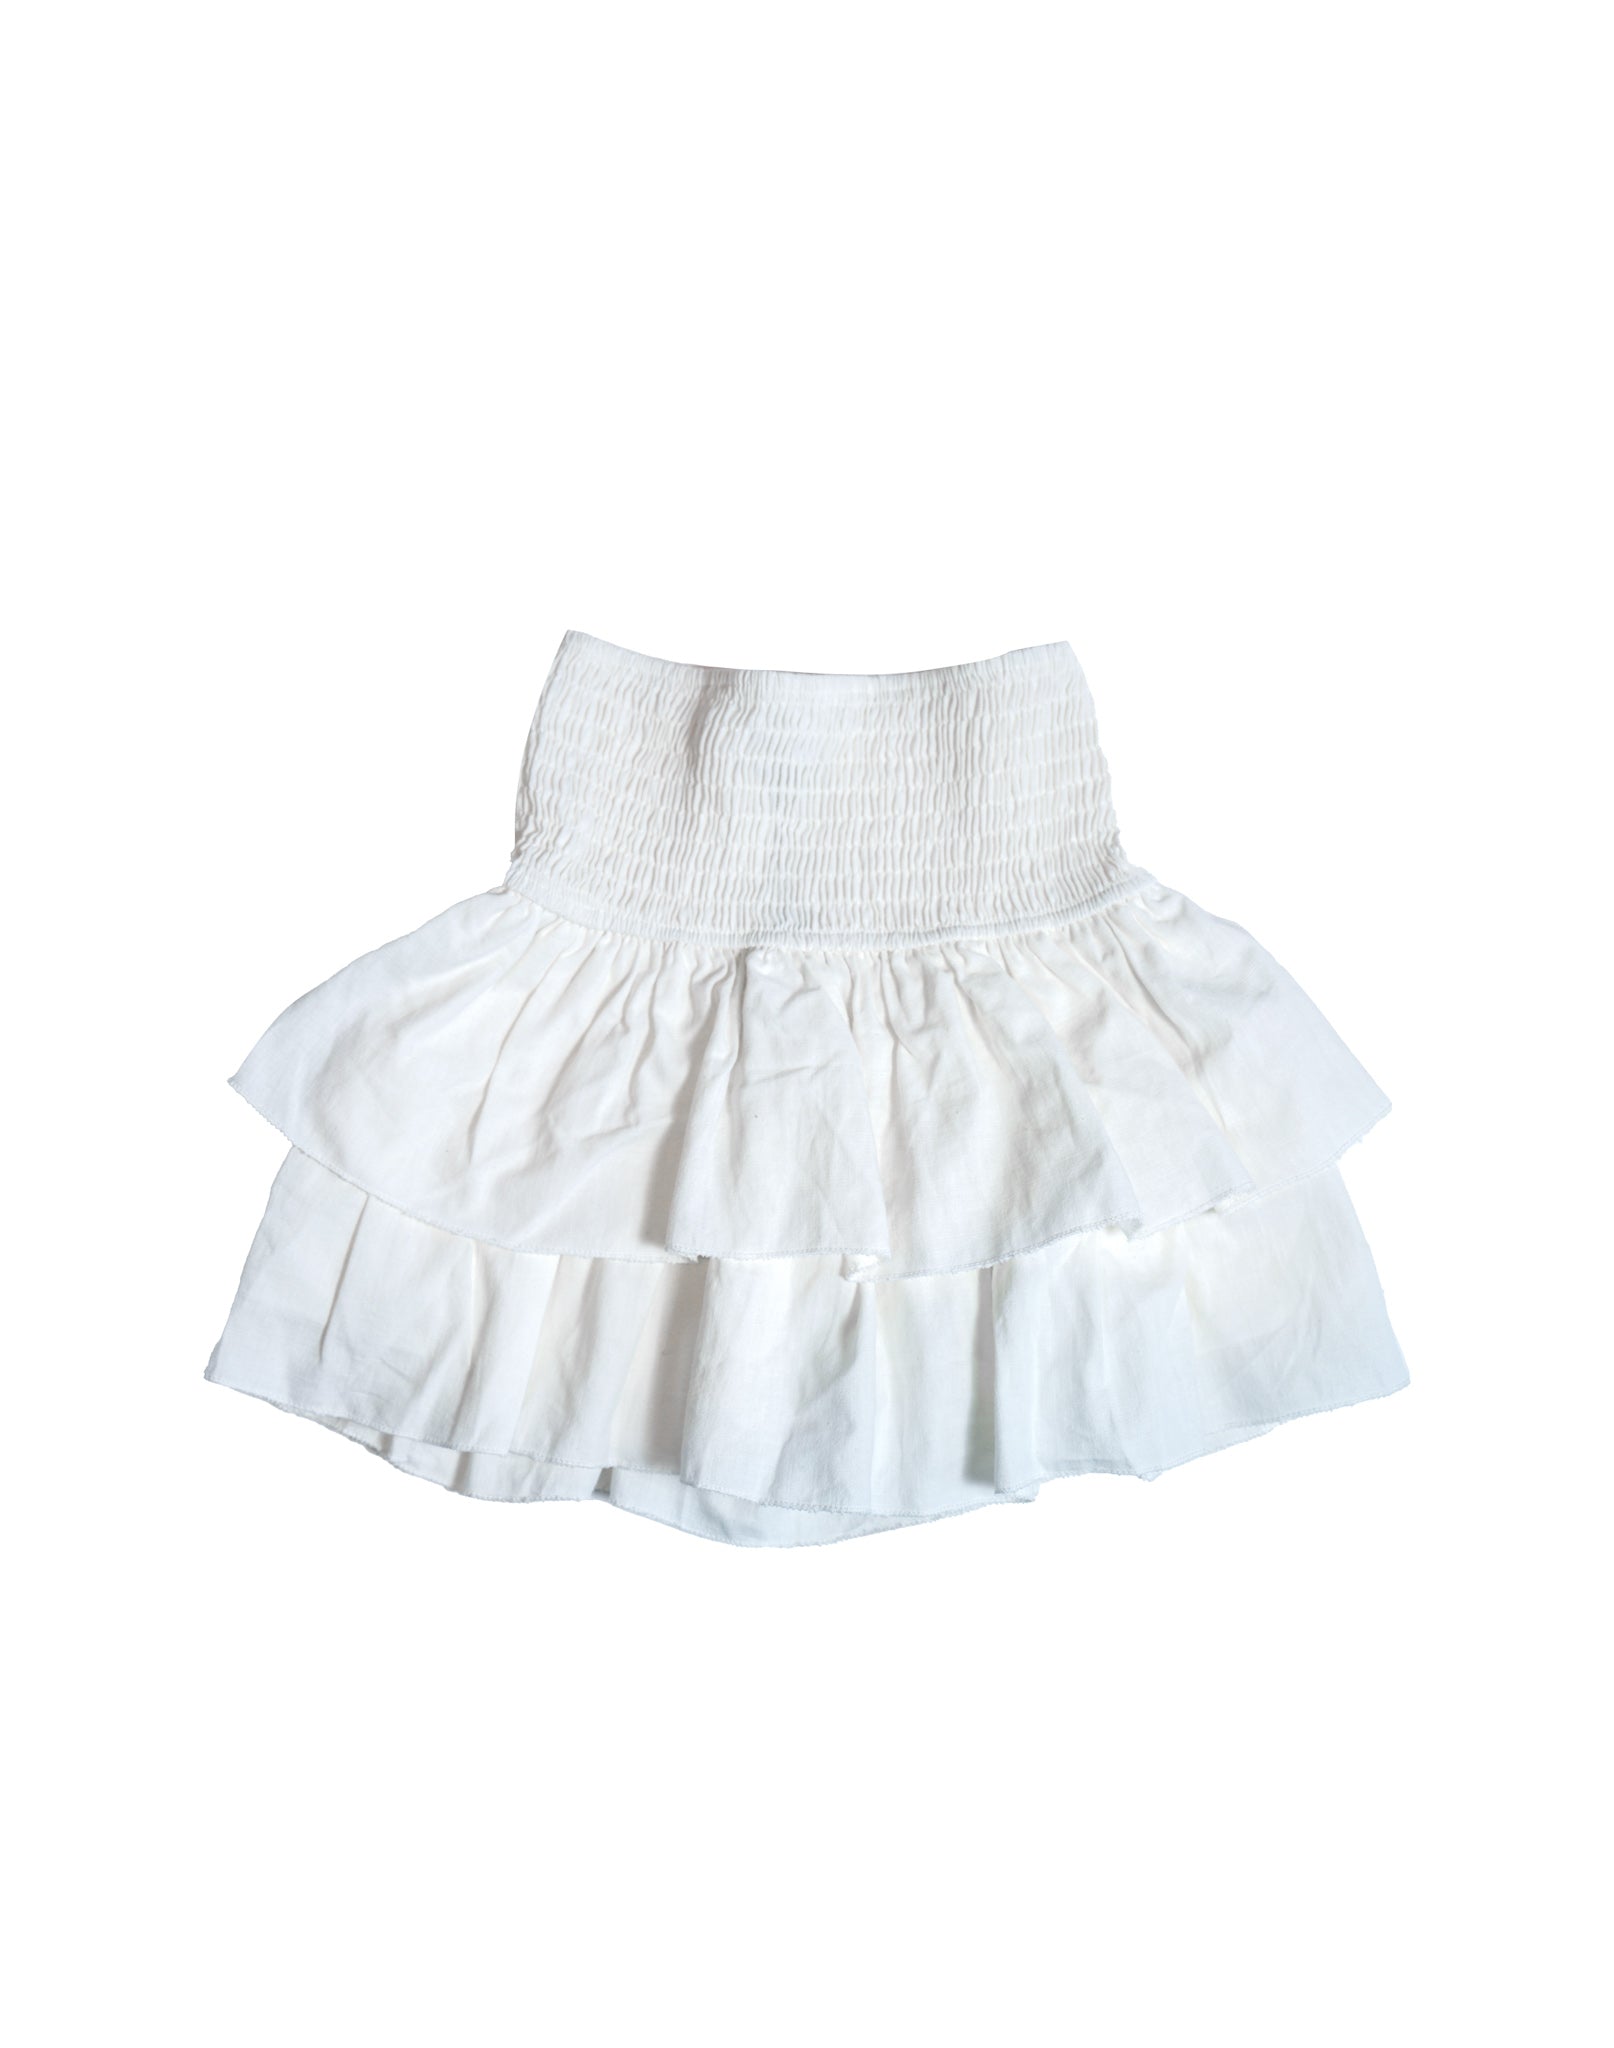 "Linen" skirt